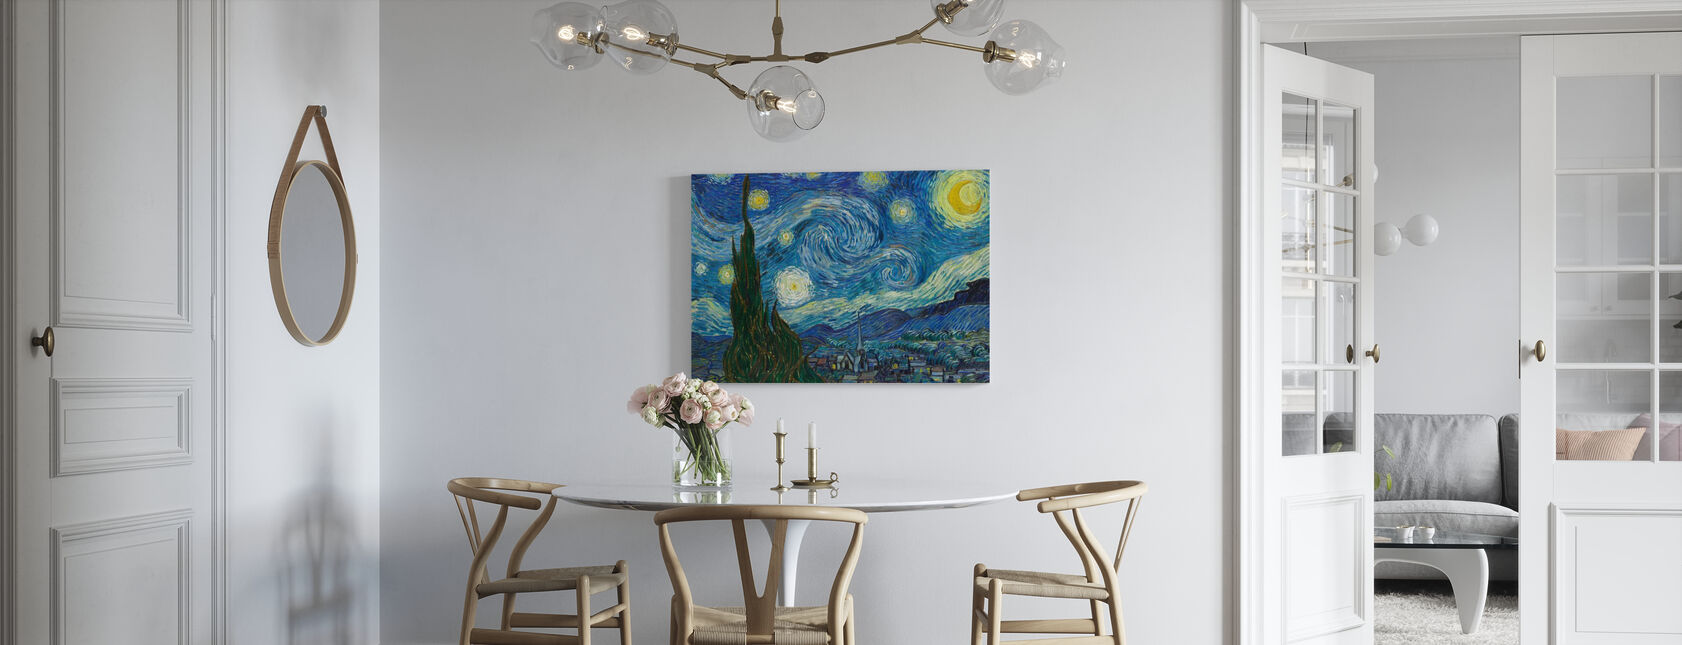 Vincent Van Gogh - Starry natt - Canvastavla - Kök